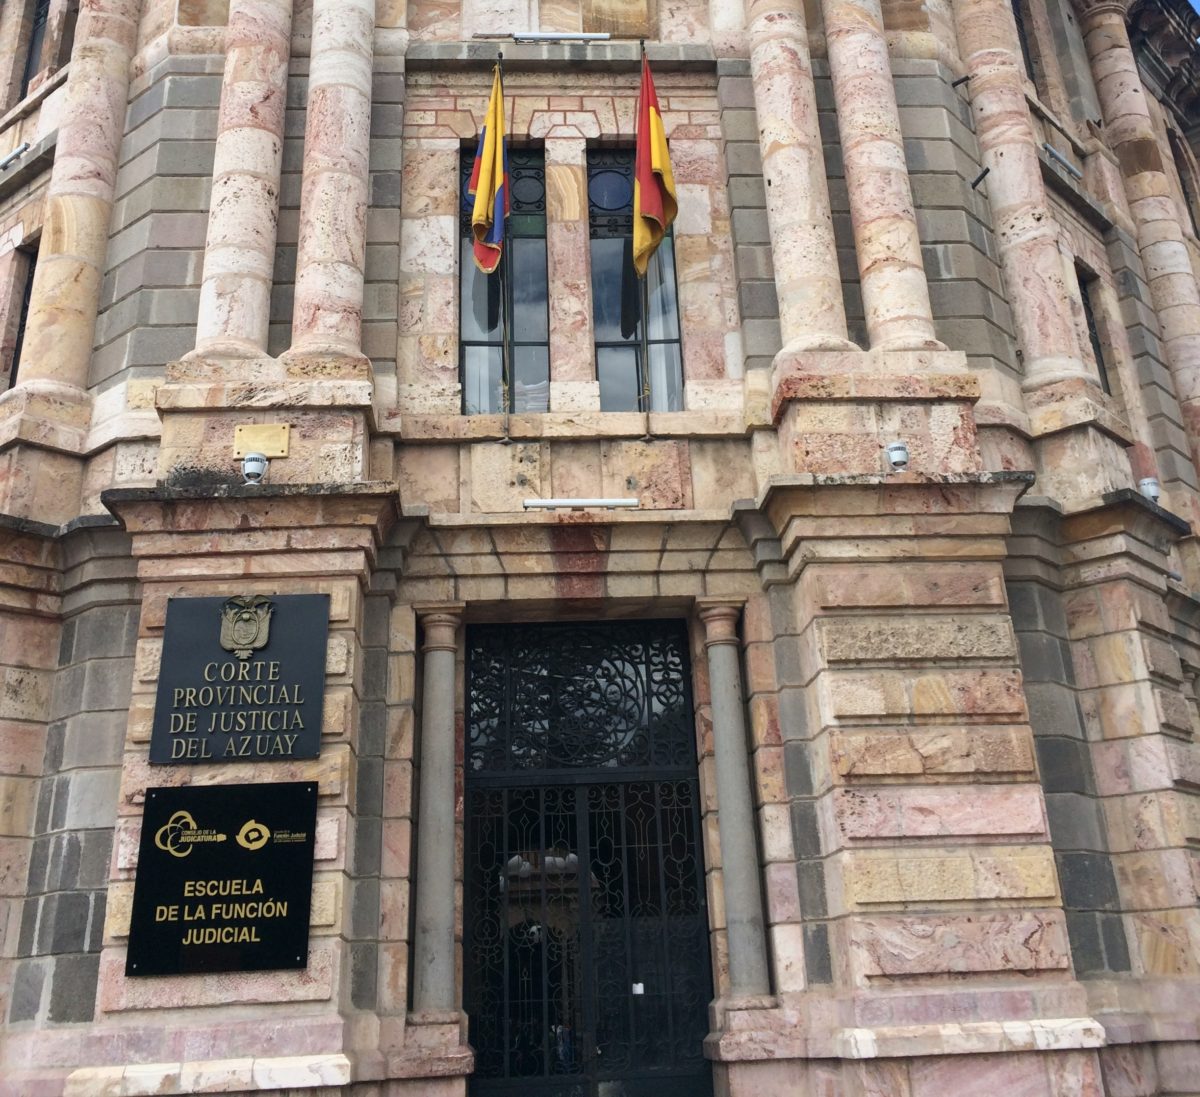 Courthouse in Cuenca, Ecuador.